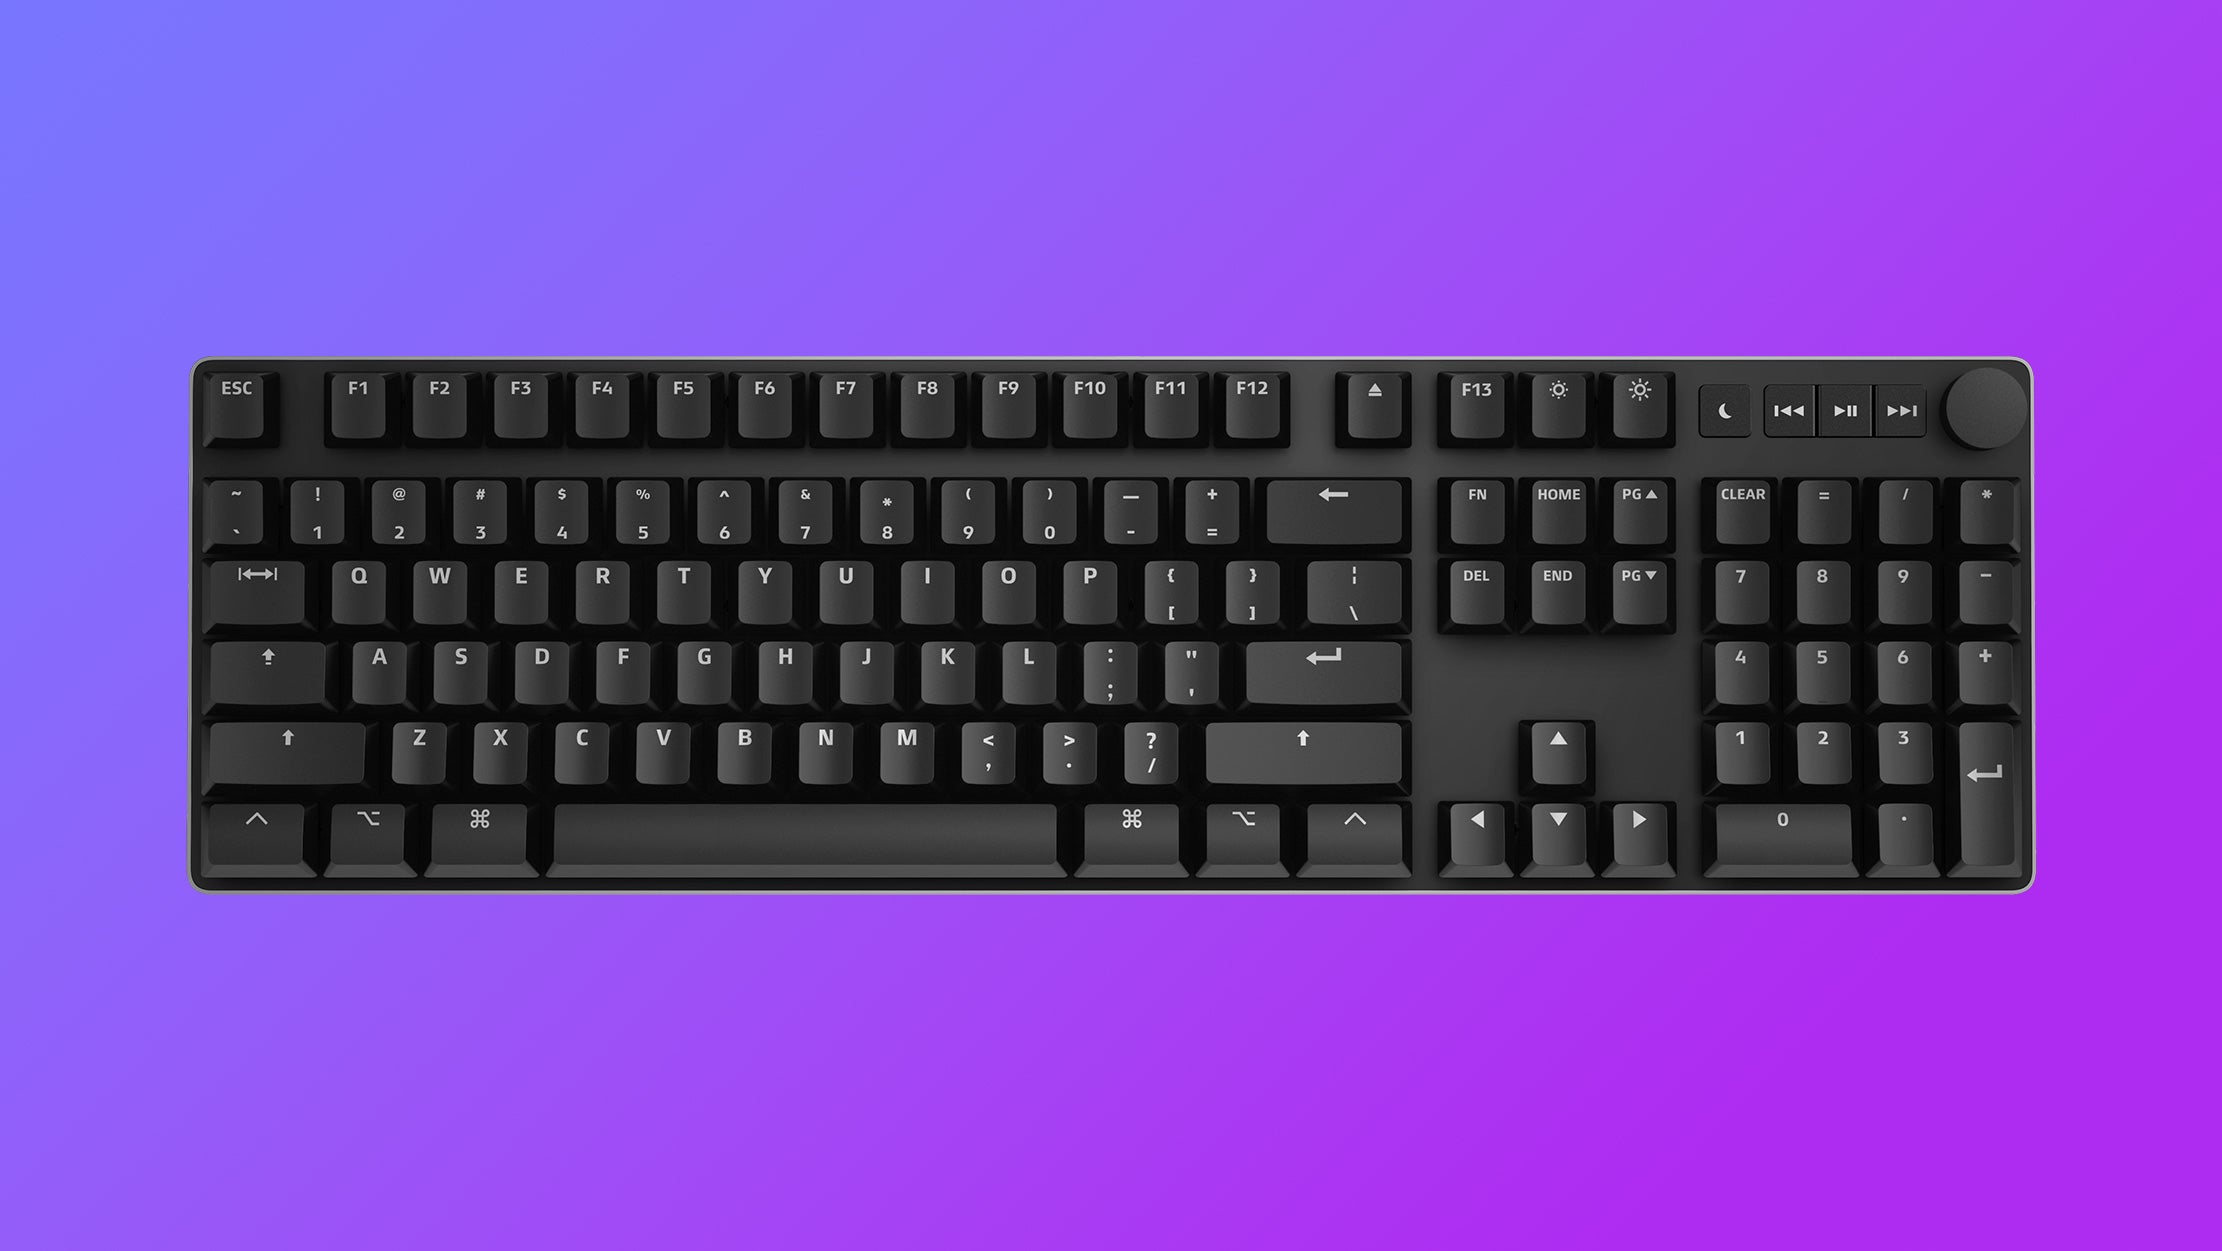 a das keyboard mactigr mechanical keyboard, with a full-size layout, volume wheel and mac keys throughout